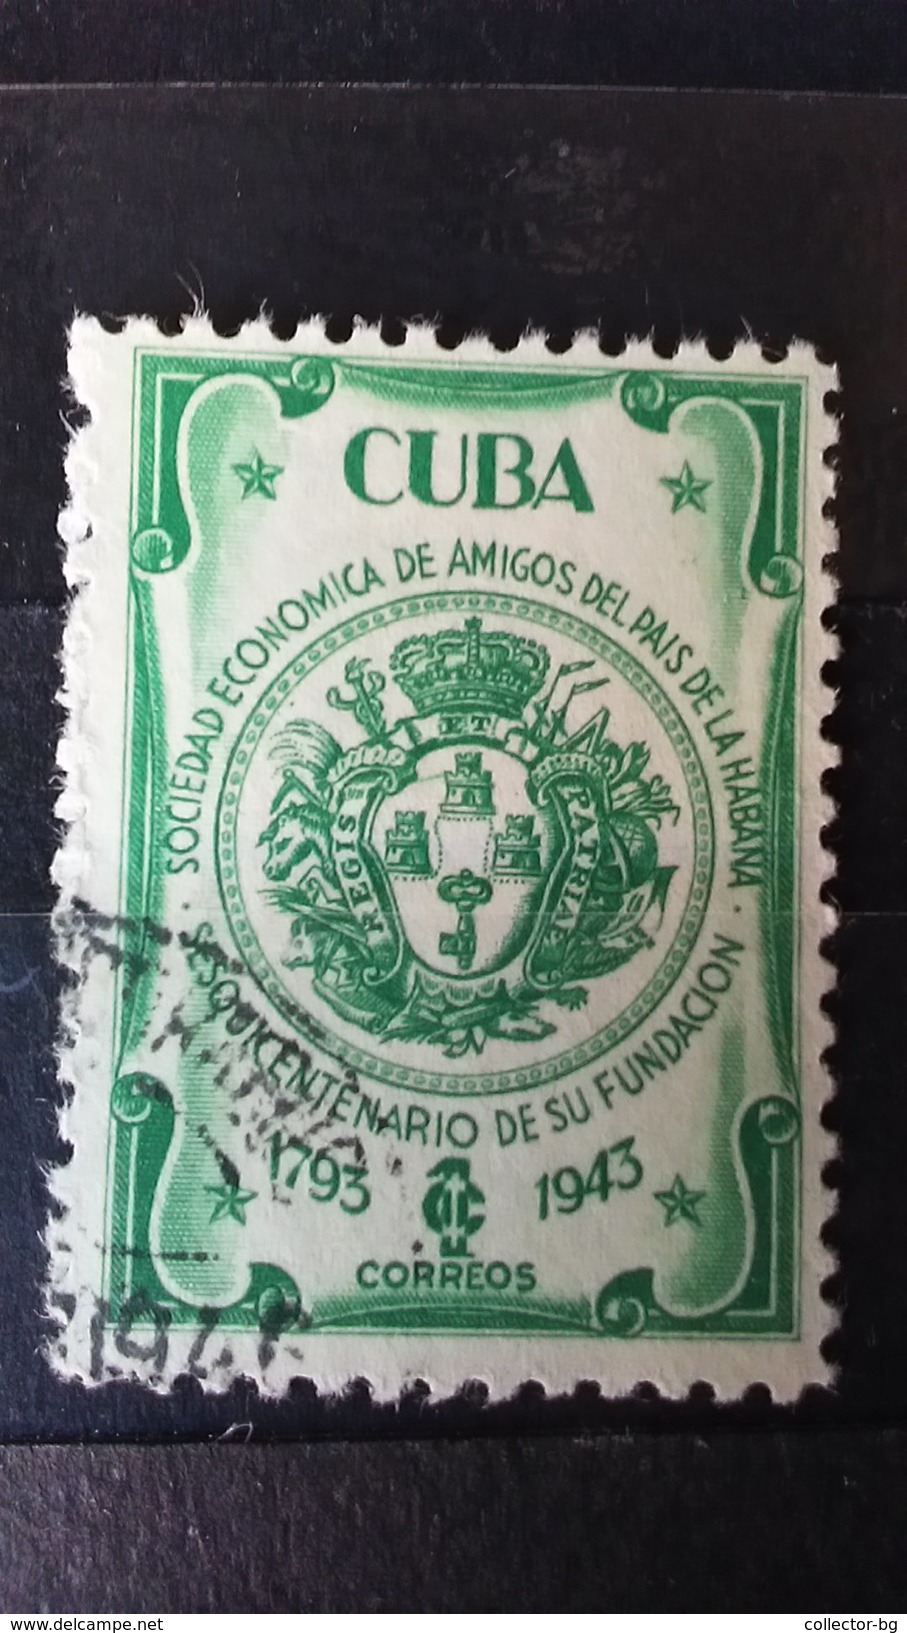 RARE 1C CORREOS  CUBA 1793-1943 ECONOMICA USED STAMP TIMBRE - Gebruikt